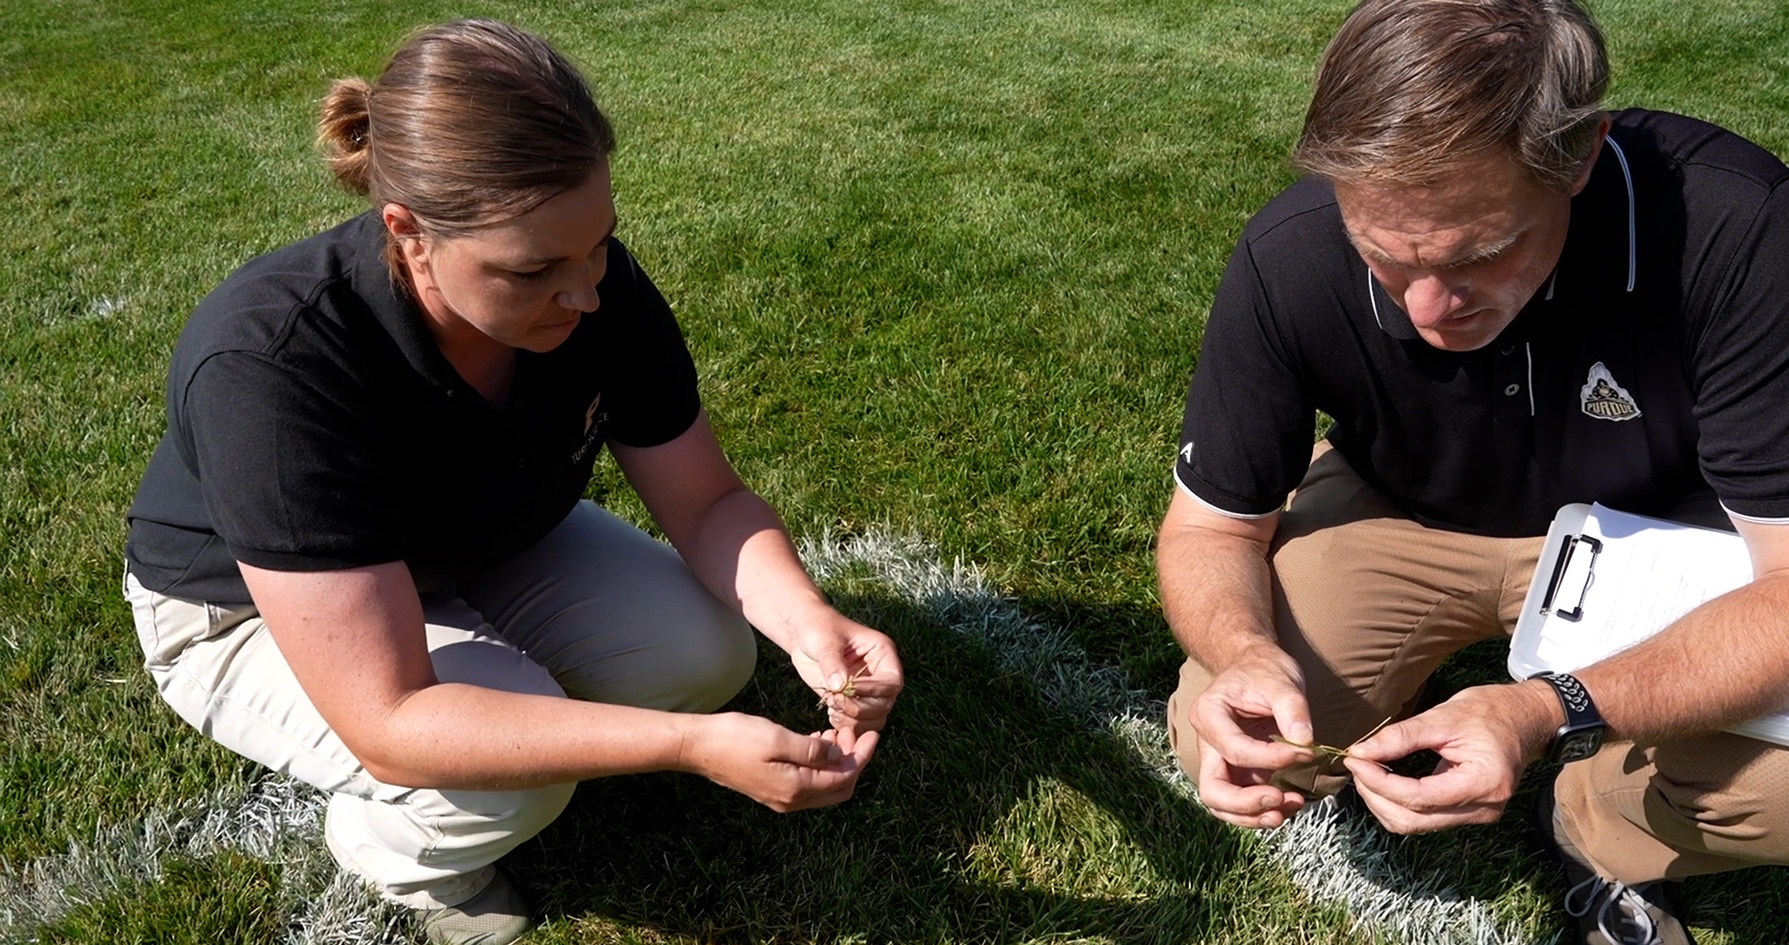 Turf scientist examine grass on a field.